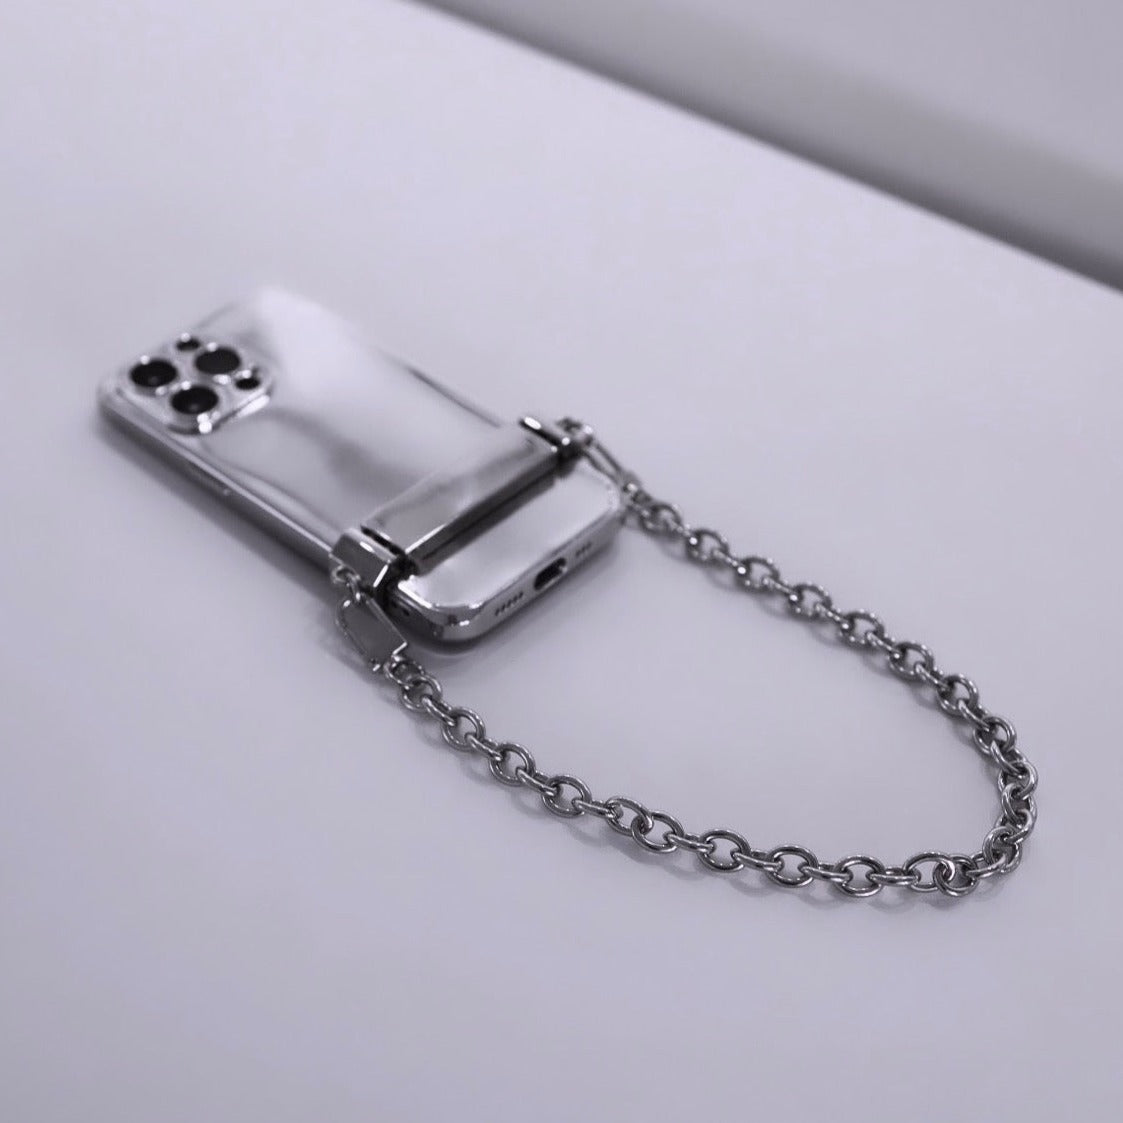 Phone holder chain